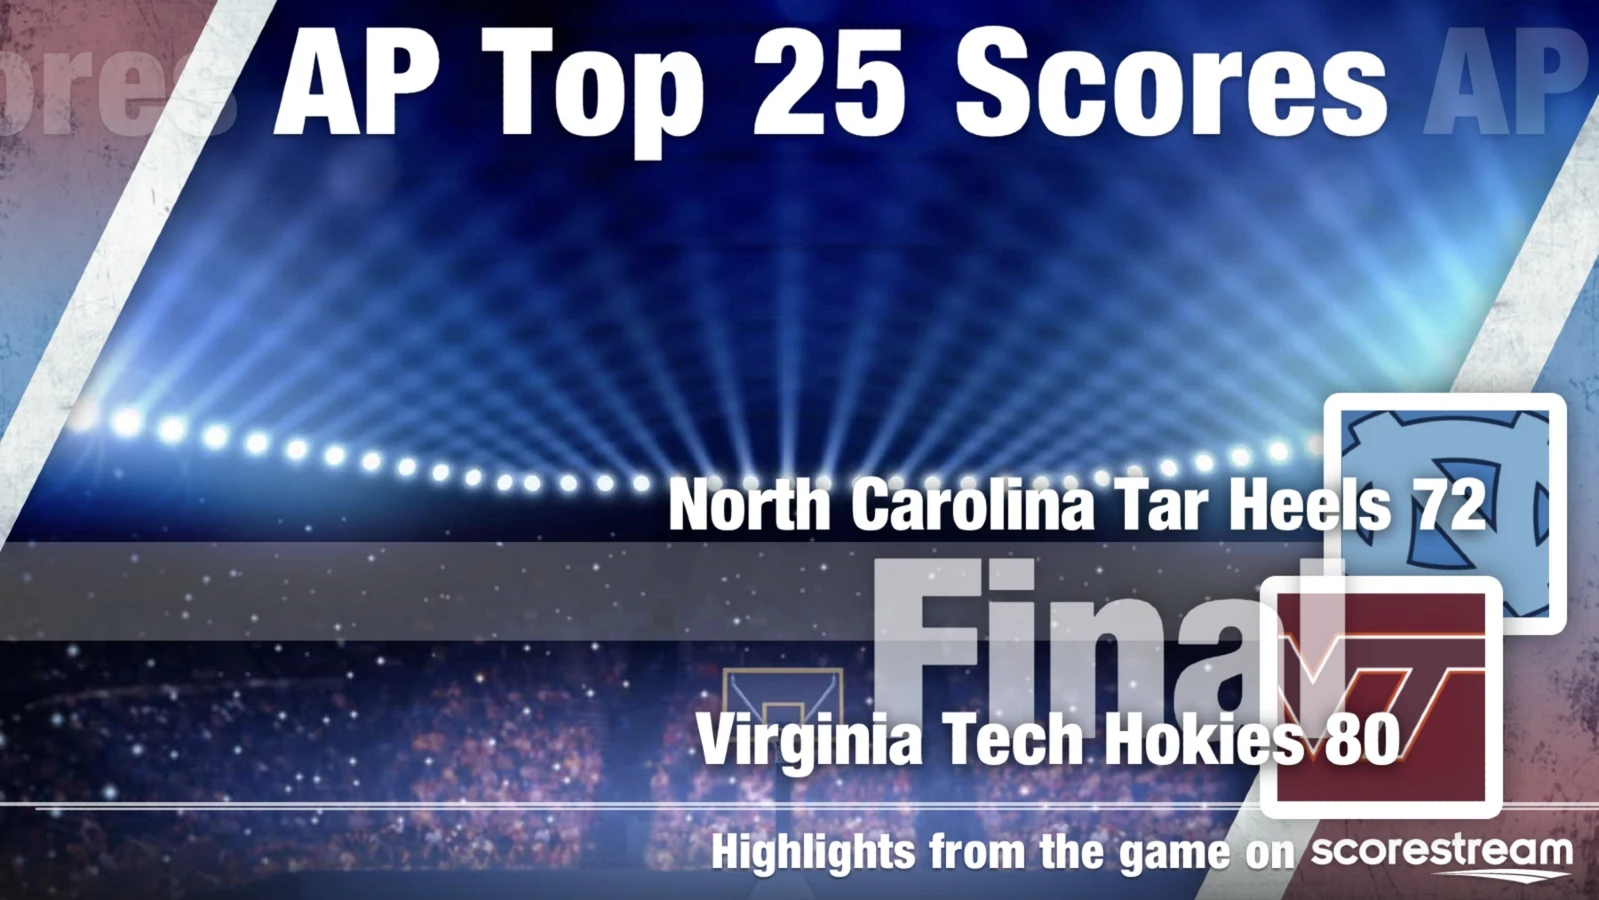 The North Carolina vs Virginia Tech college basketball score